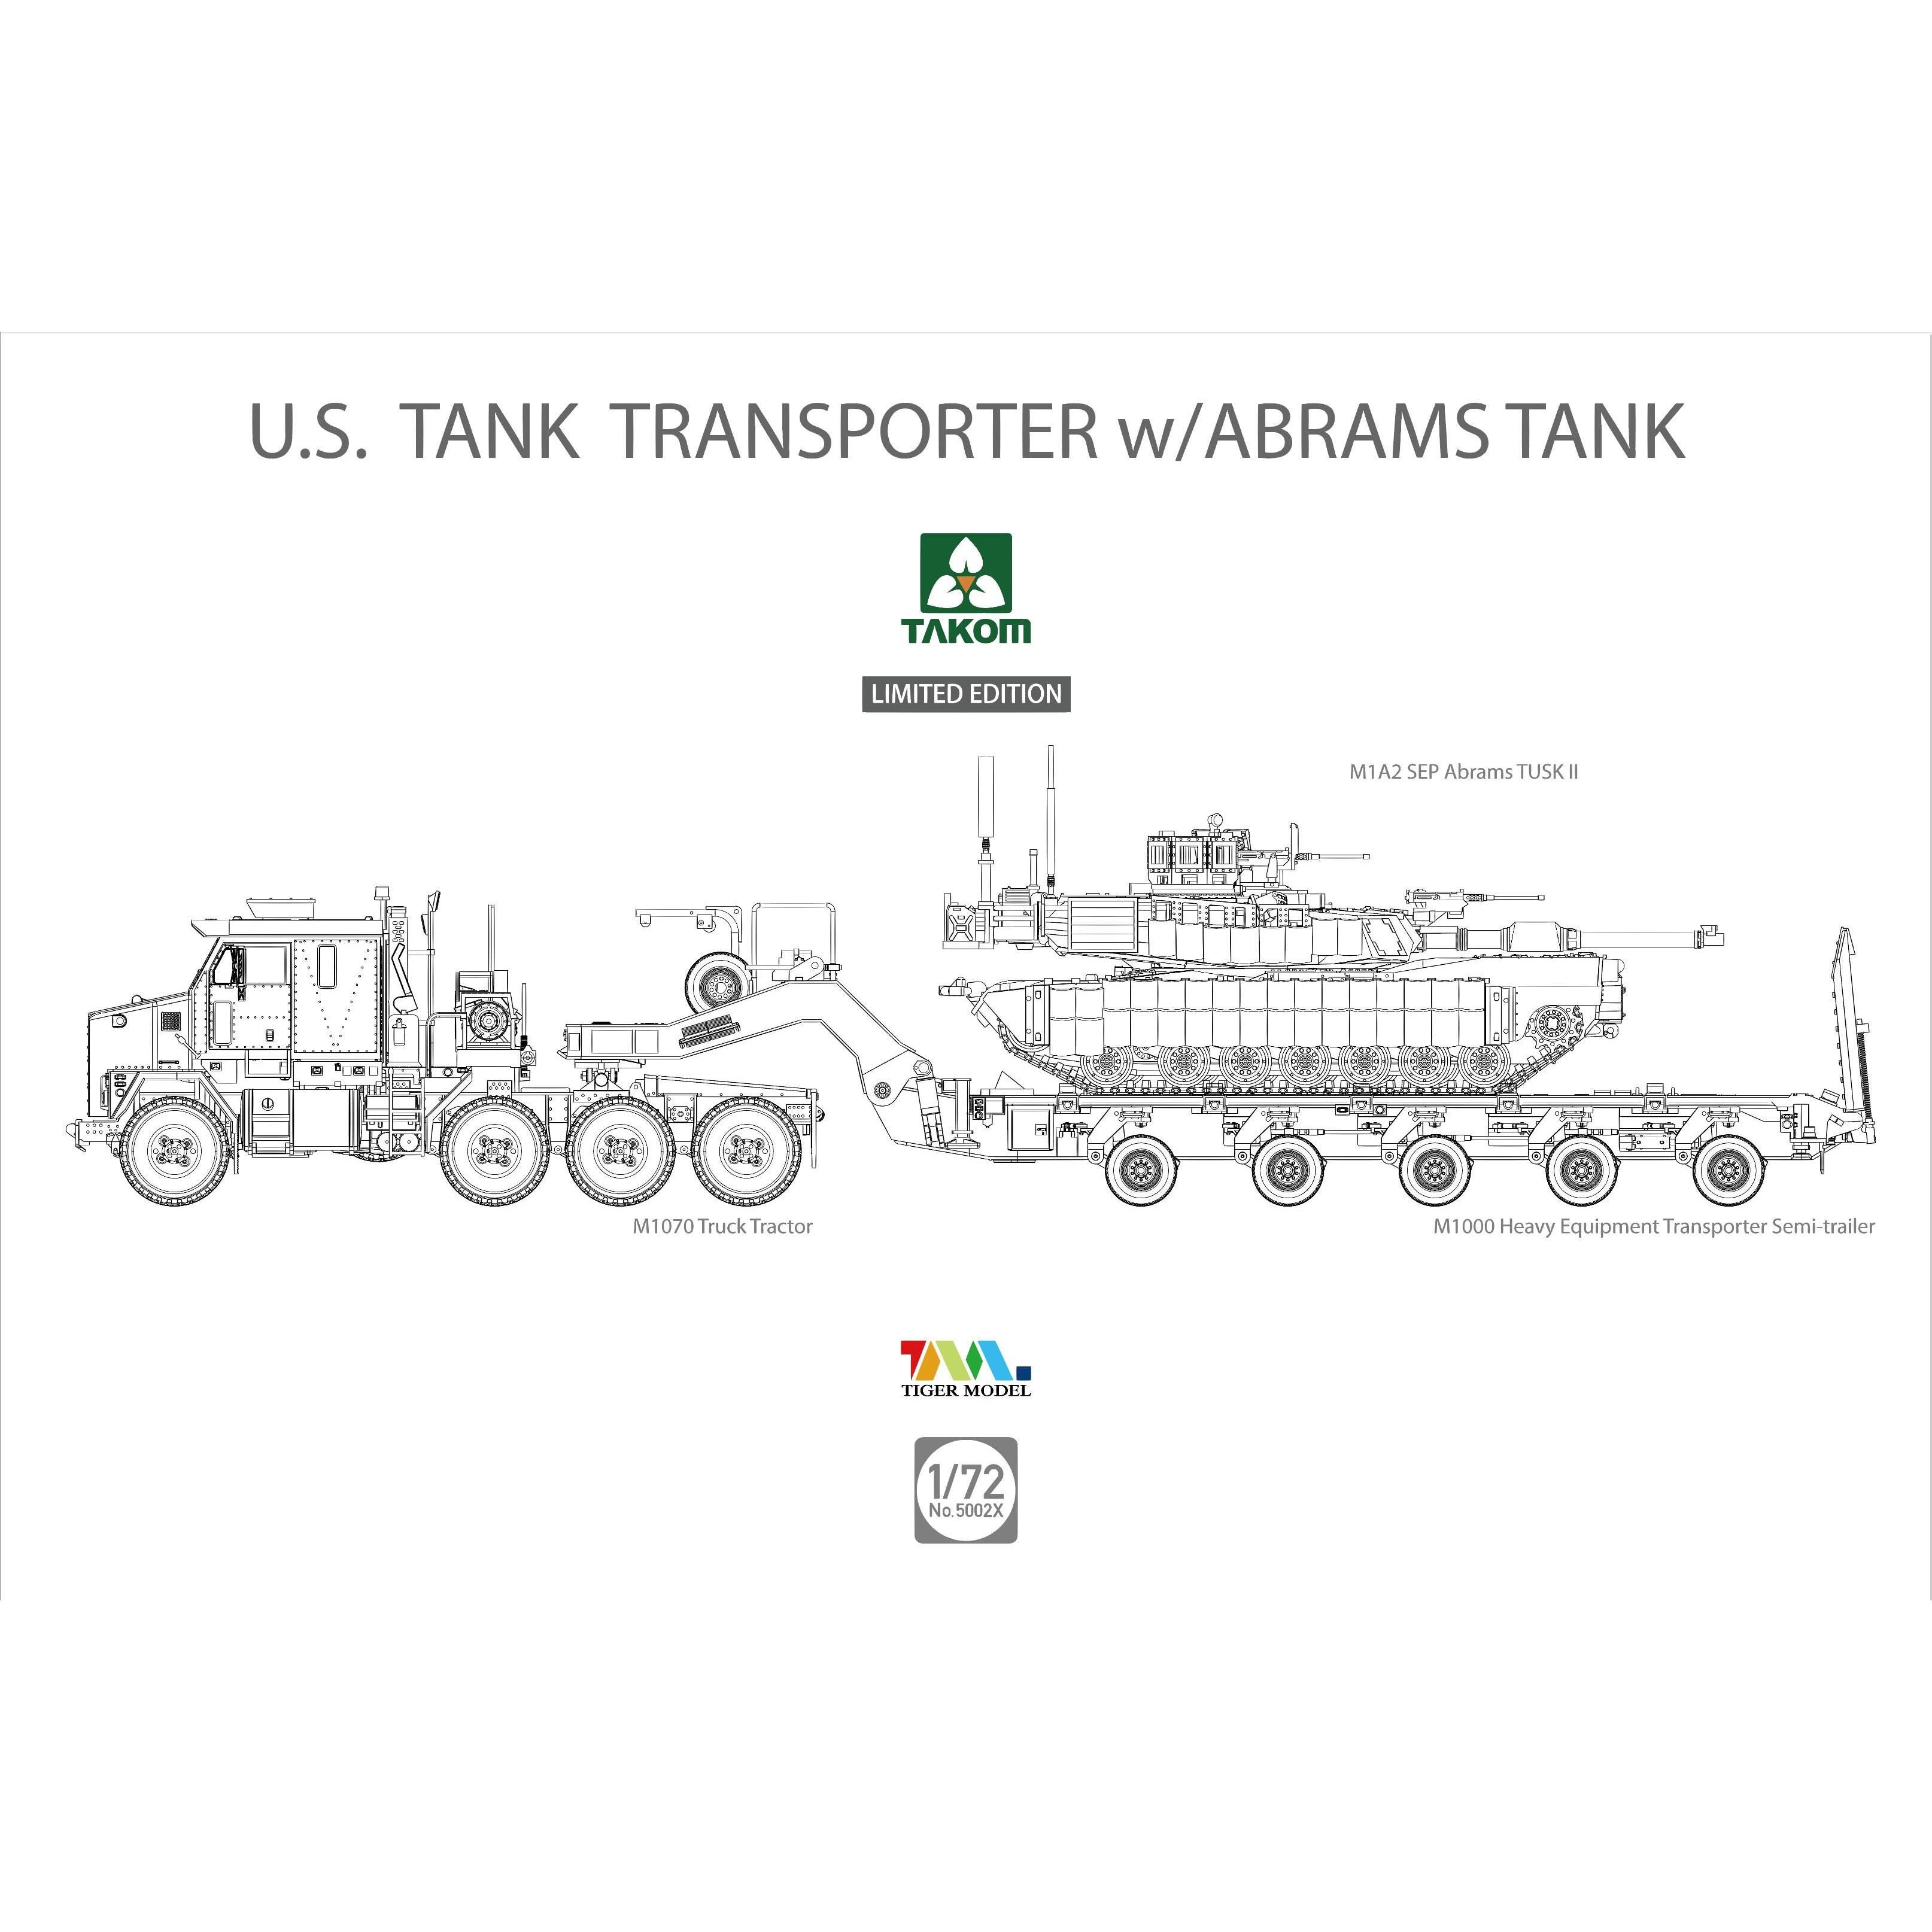 U.S. Tank Transporter w/M1A2 SEP Abrams TUSK II Tank Limited Edition 1/72 #5002X by Takom